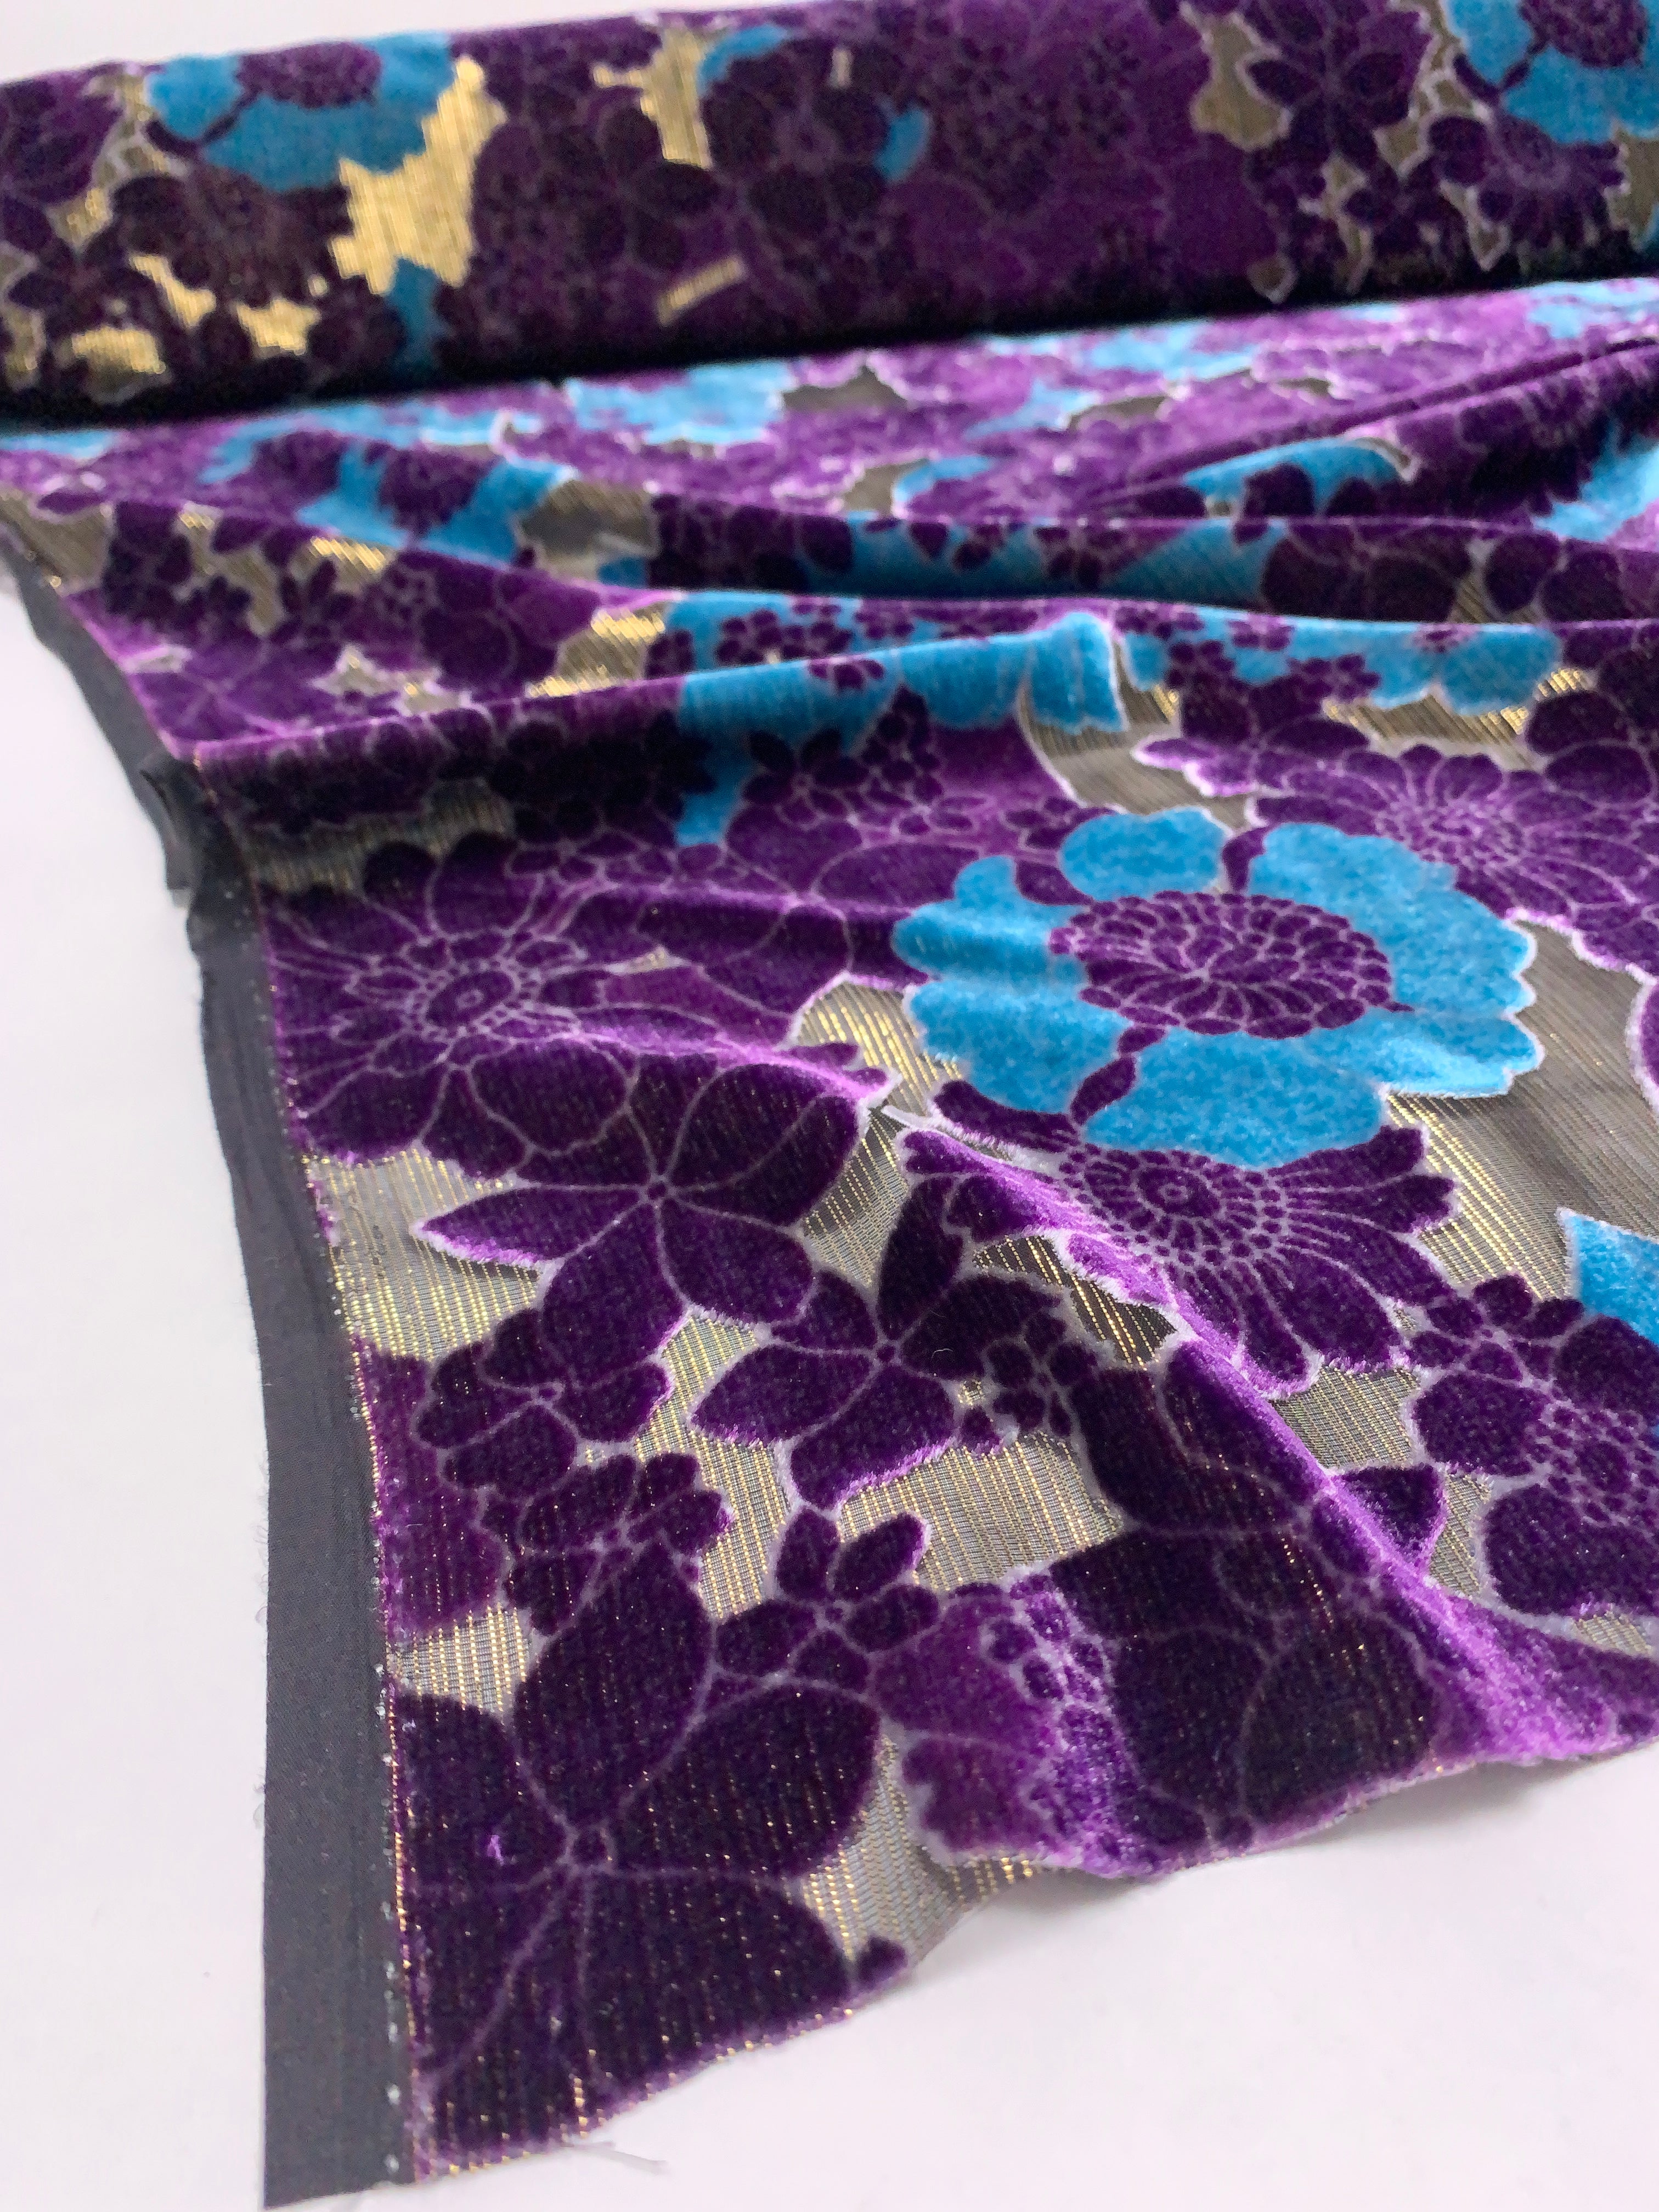 Anna Sui Floral Cut Velvet on Metallic Silk Chiffon - Violet/Blue/Black/Gold